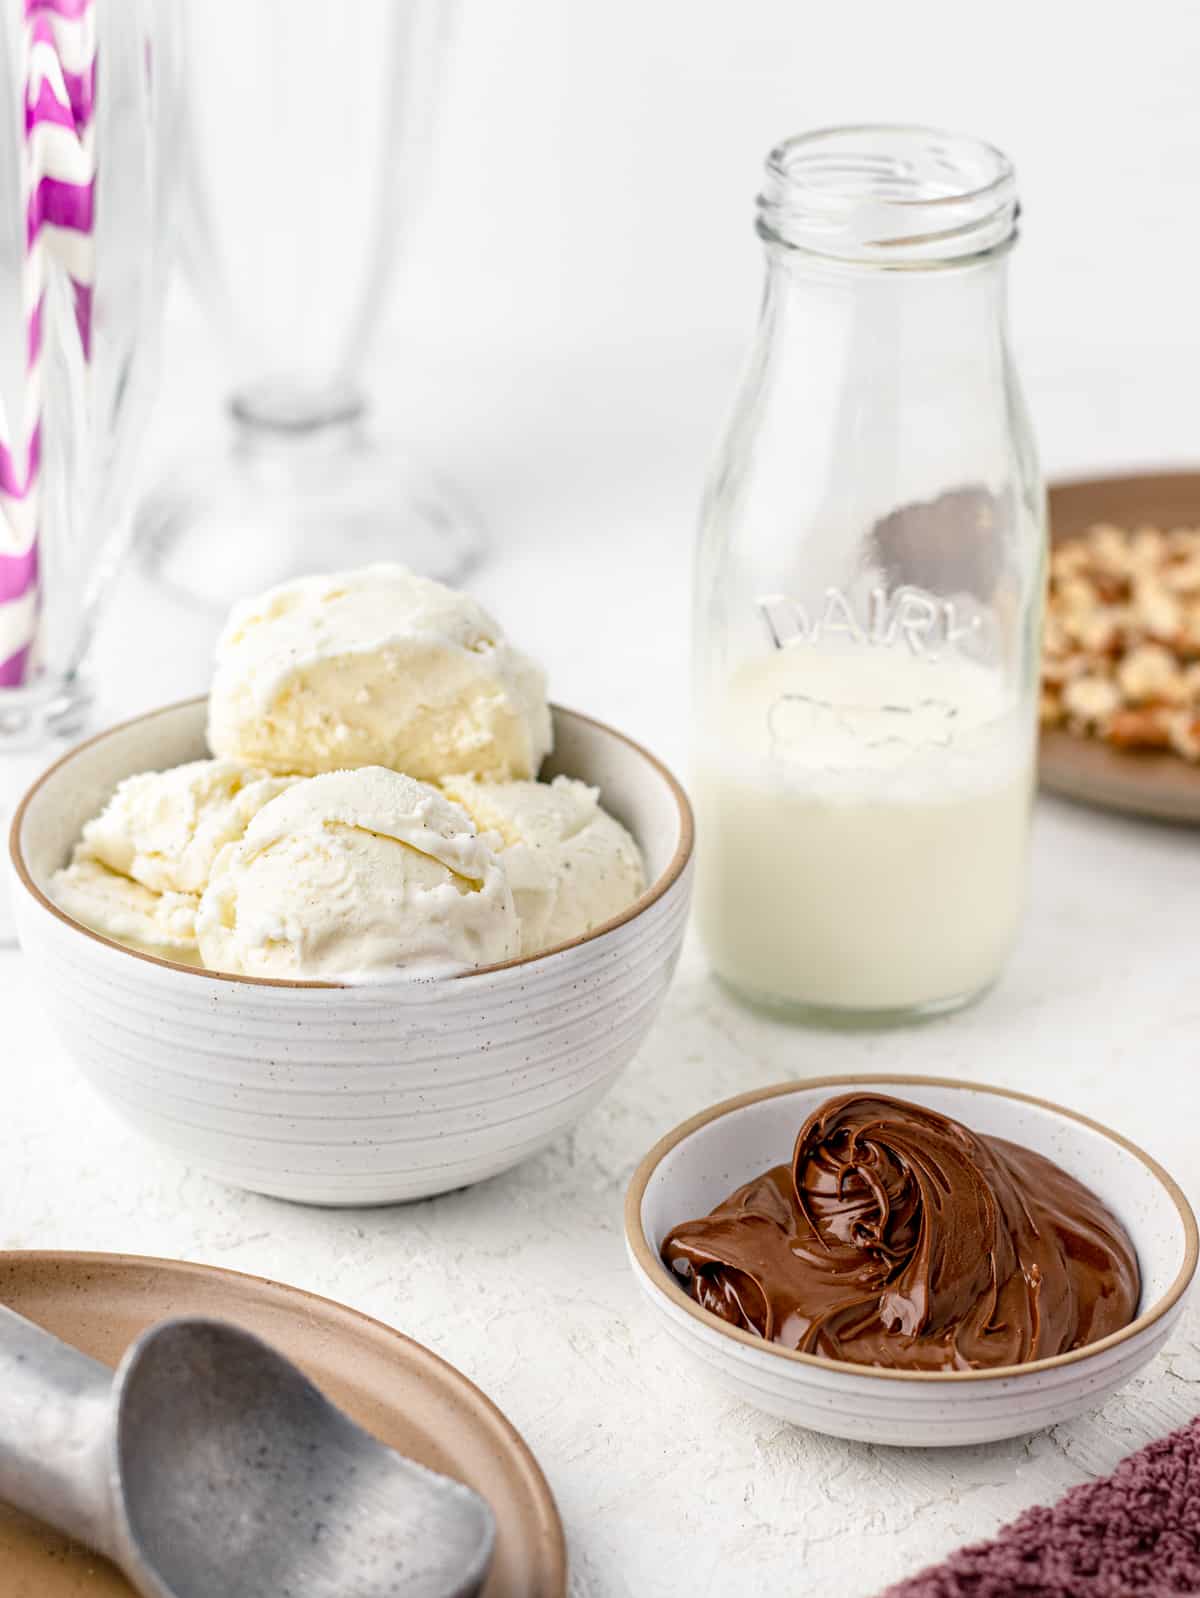 Ingredients. Vanilla Ice Cream, Milk, Nutella Hazelnut Spread.